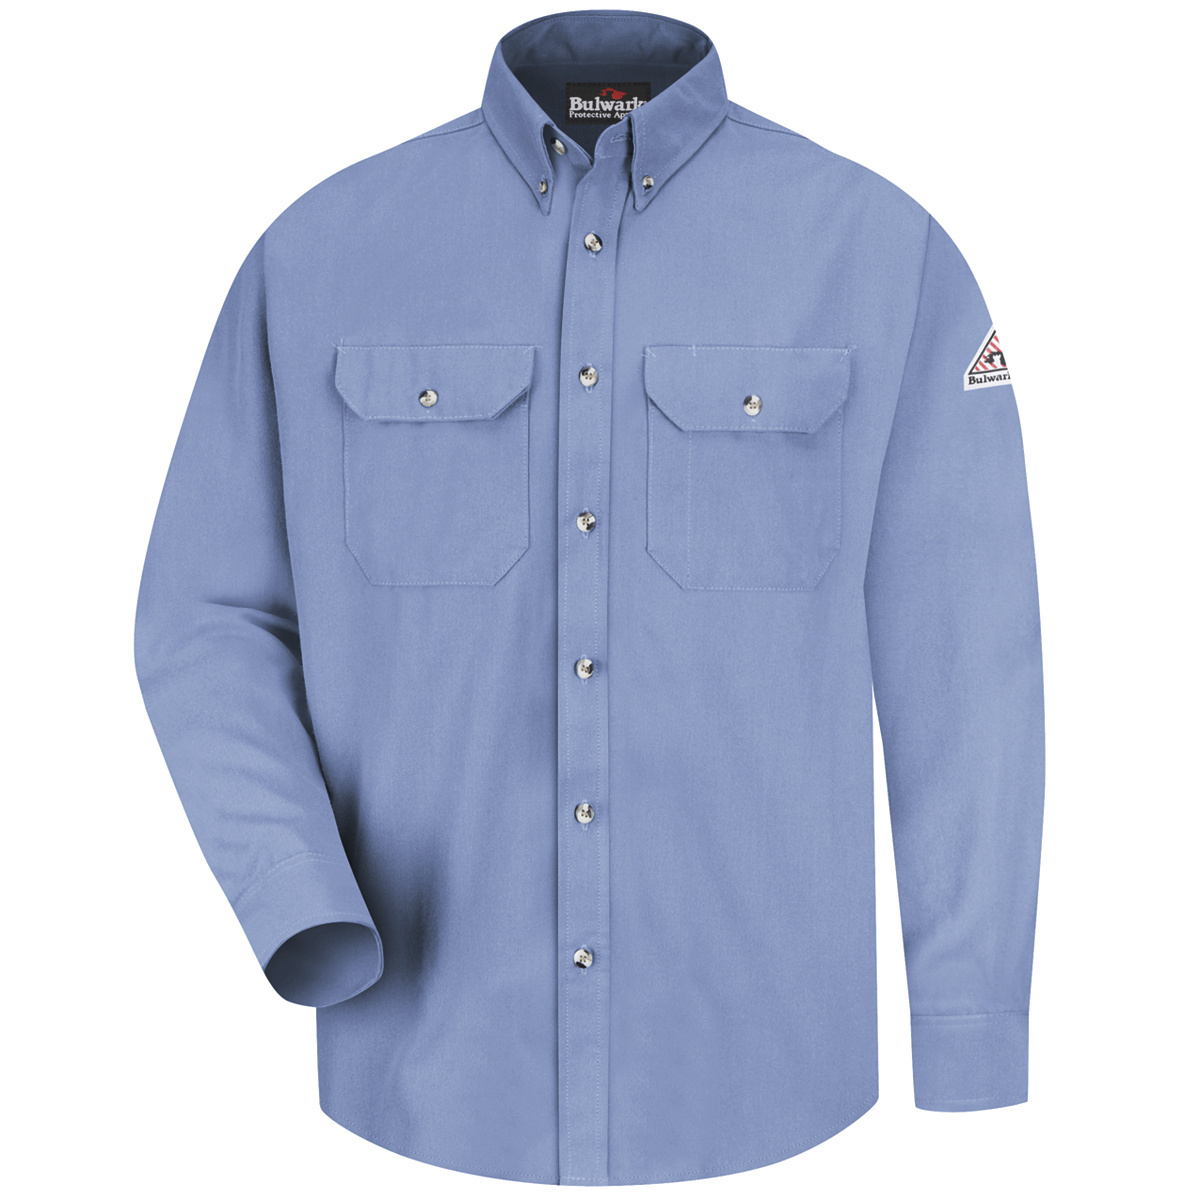 Bulwark® X-Large X-Tall Light Blue Modacrylic/Lyocell/Aramid Flame Resistant Dress Uniform Shirt With Button Front Closure